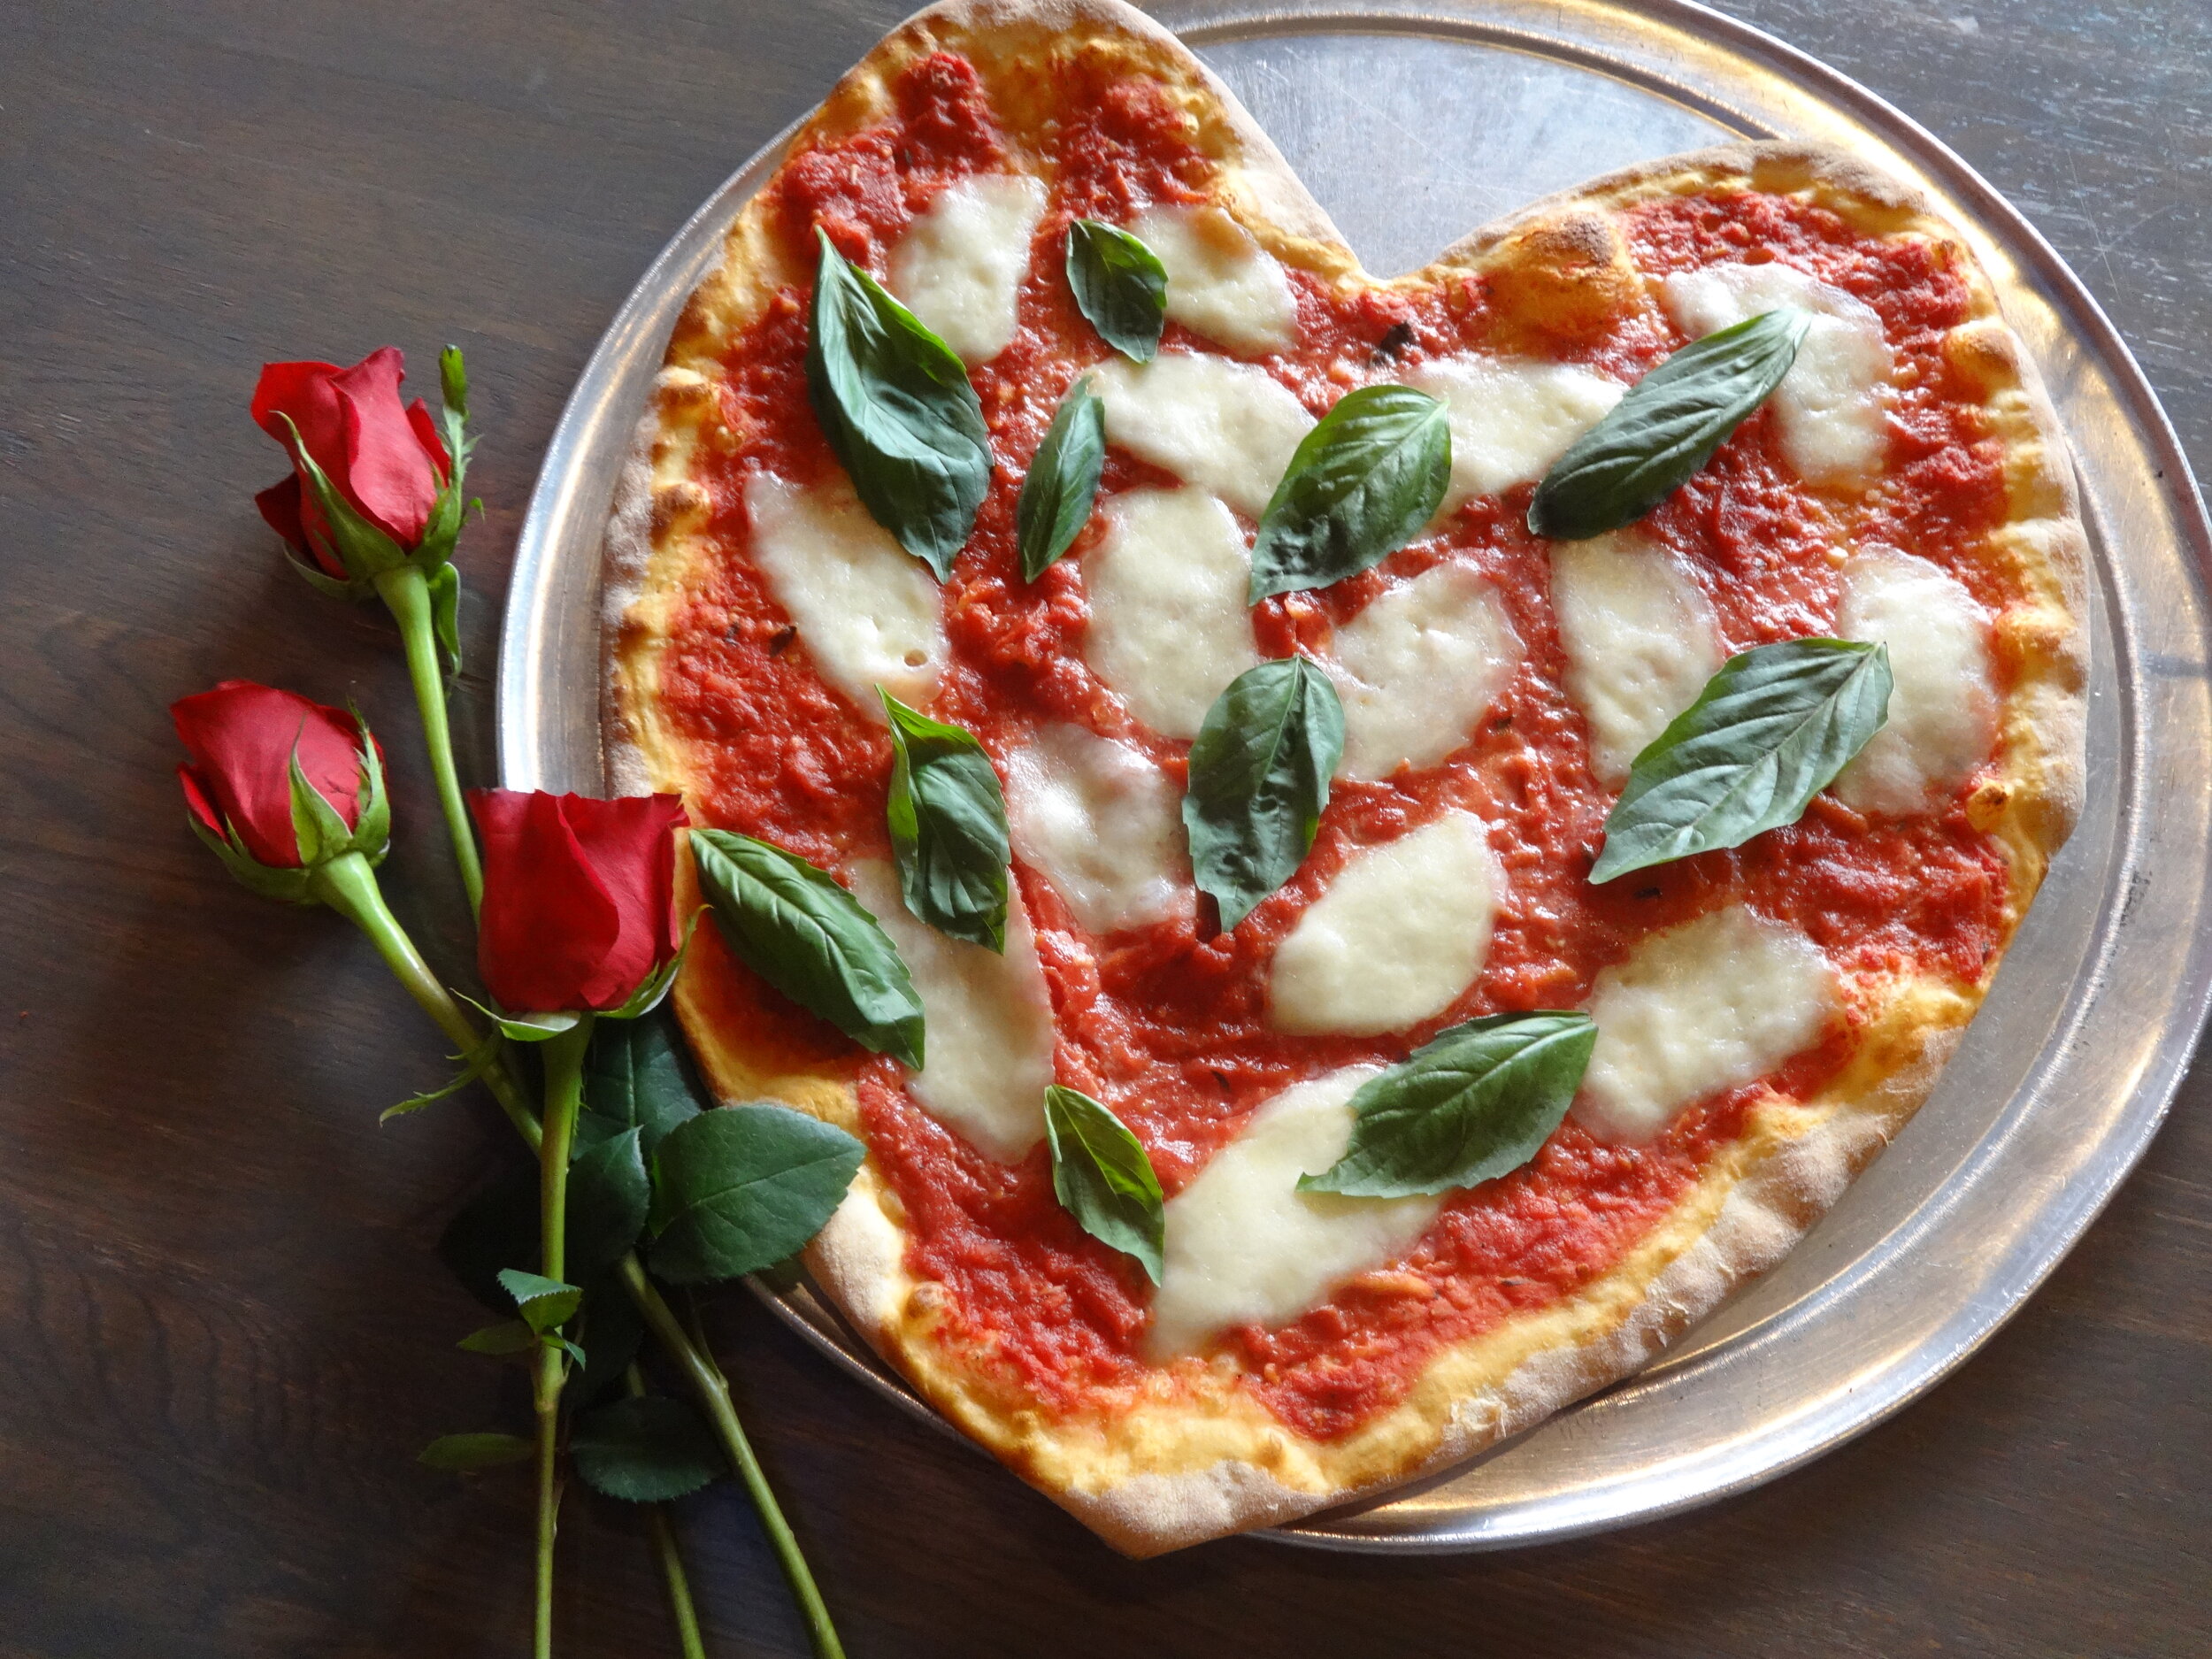 https://images.squarespace-cdn.com/content/v1/510dee82e4b0b75977432f4b/1612211218484-QTVEX2U9B4K0PX4EZM7F/Valentines+Day%2C+SliCE%2C+Philadelphia%2C+Pizza+hearts%2C+Pizza-grams%2C+Pizza+Shaped+Hearts